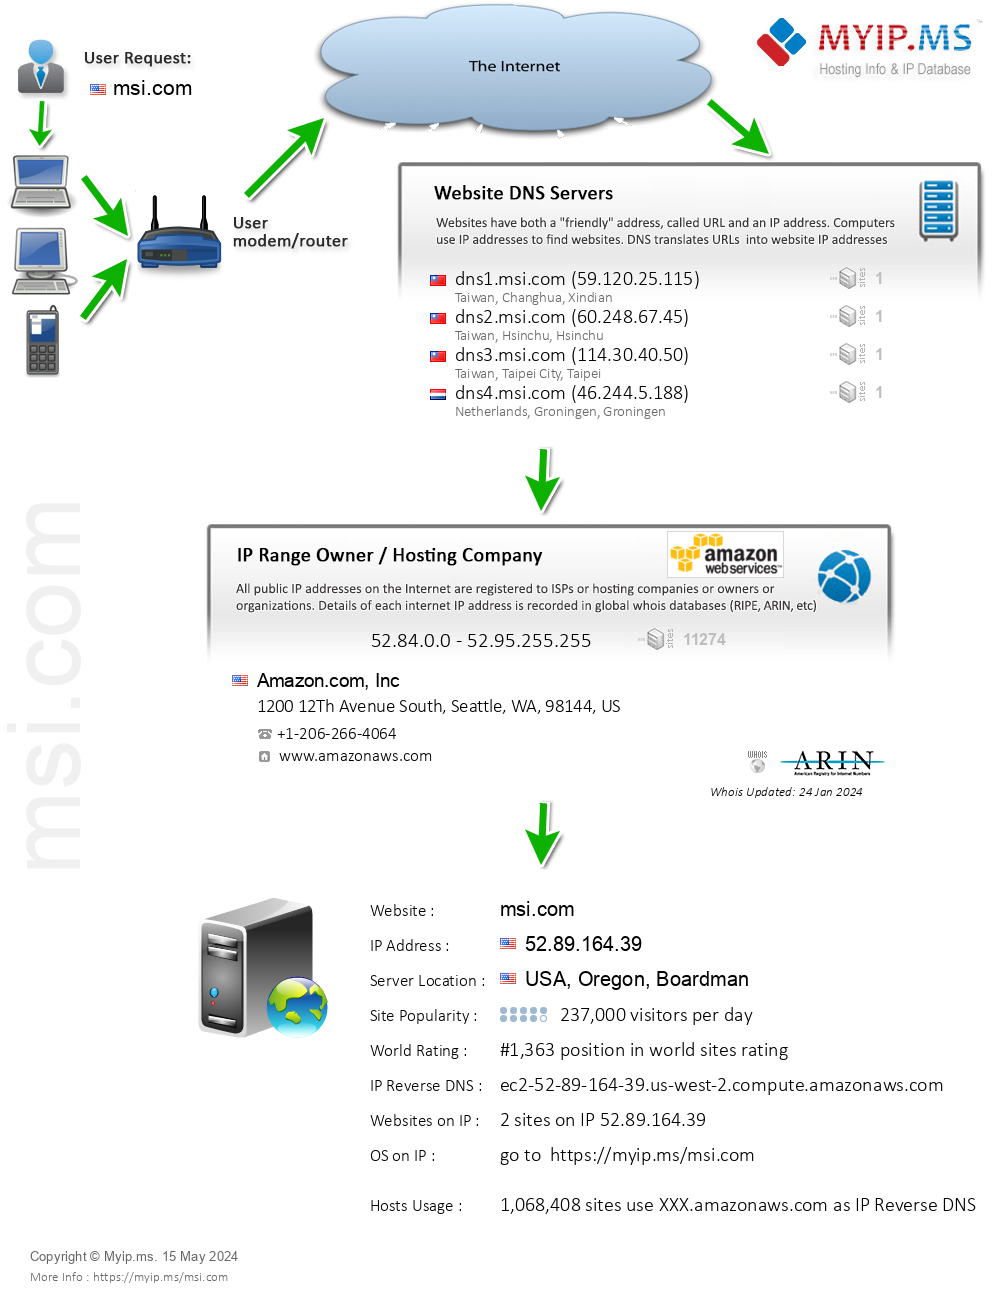 Msi.com - Website Hosting Visual IP Diagram